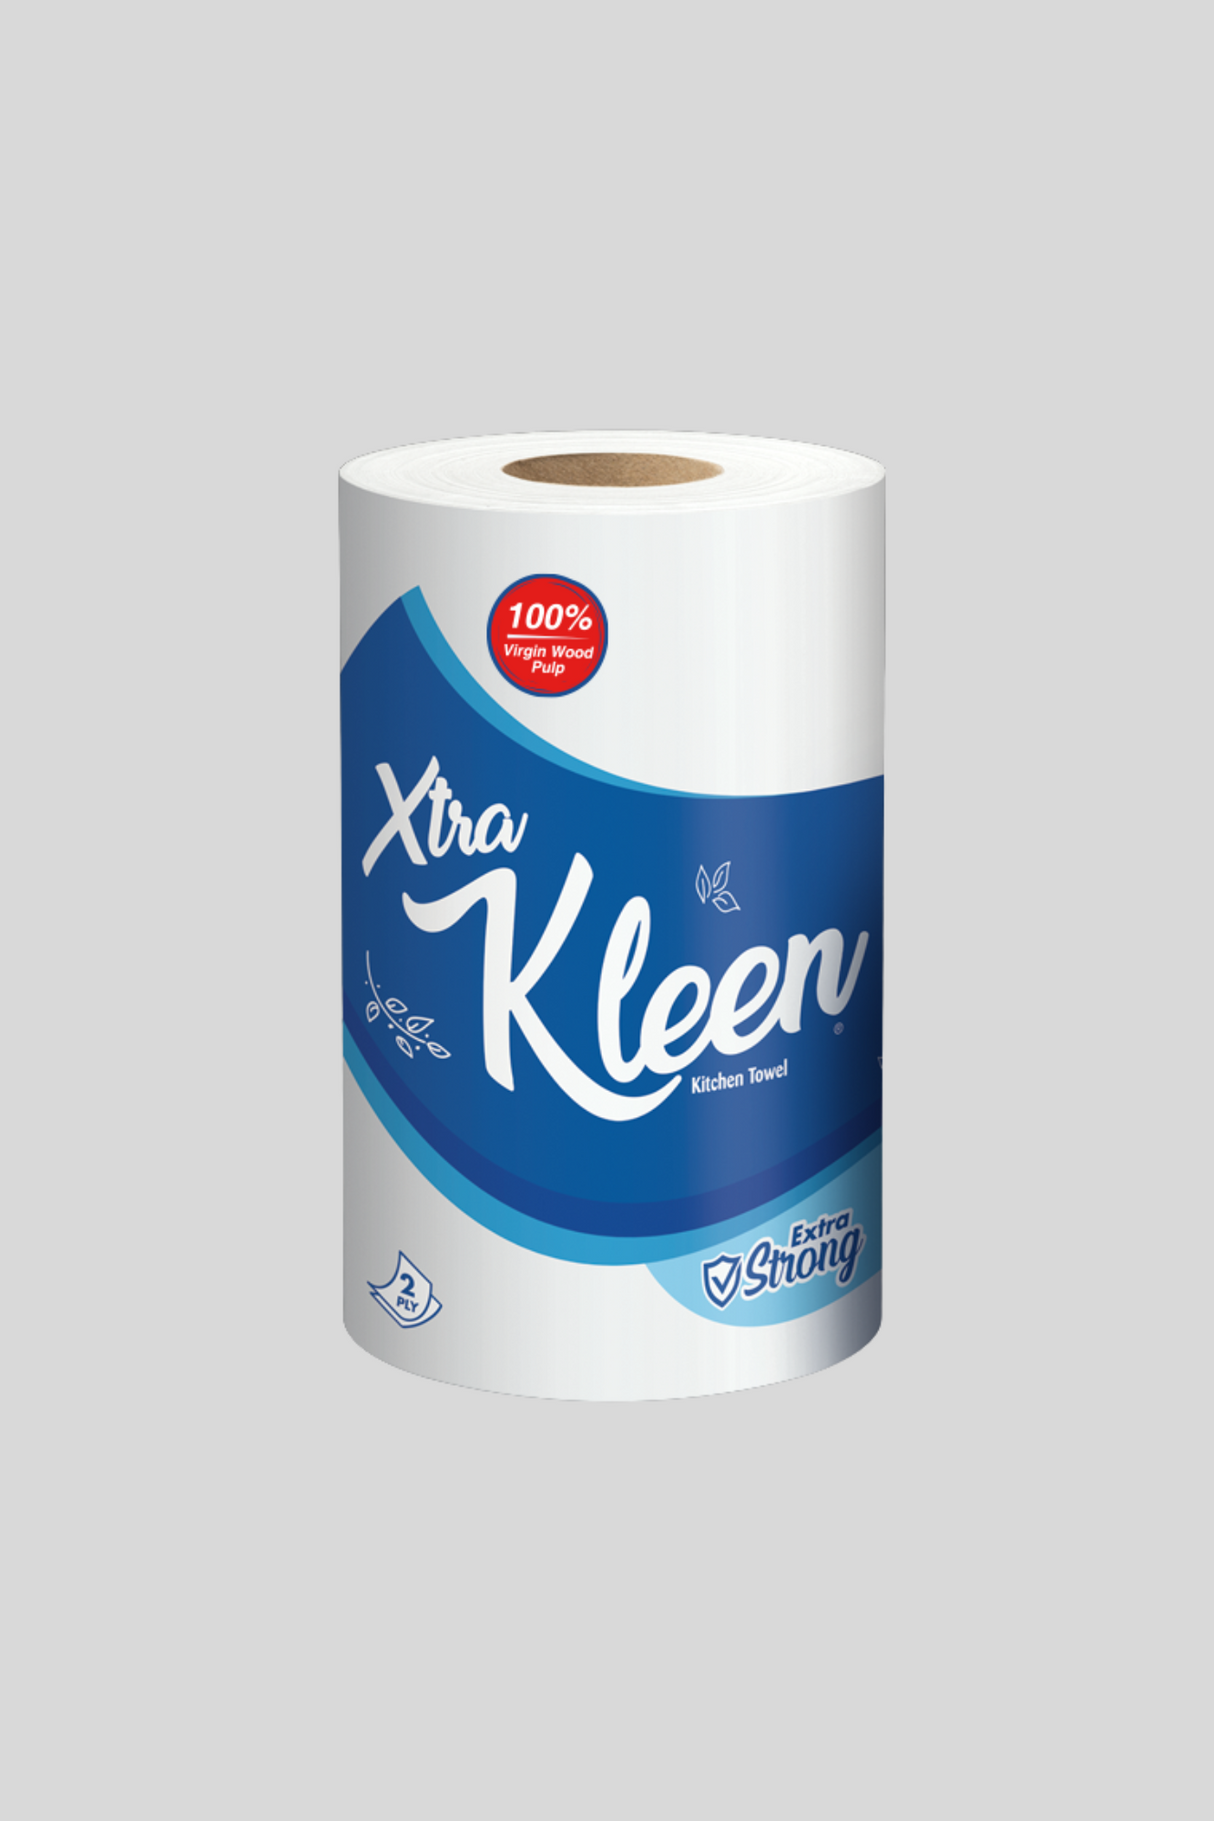 xtra kleen kitchen towel single